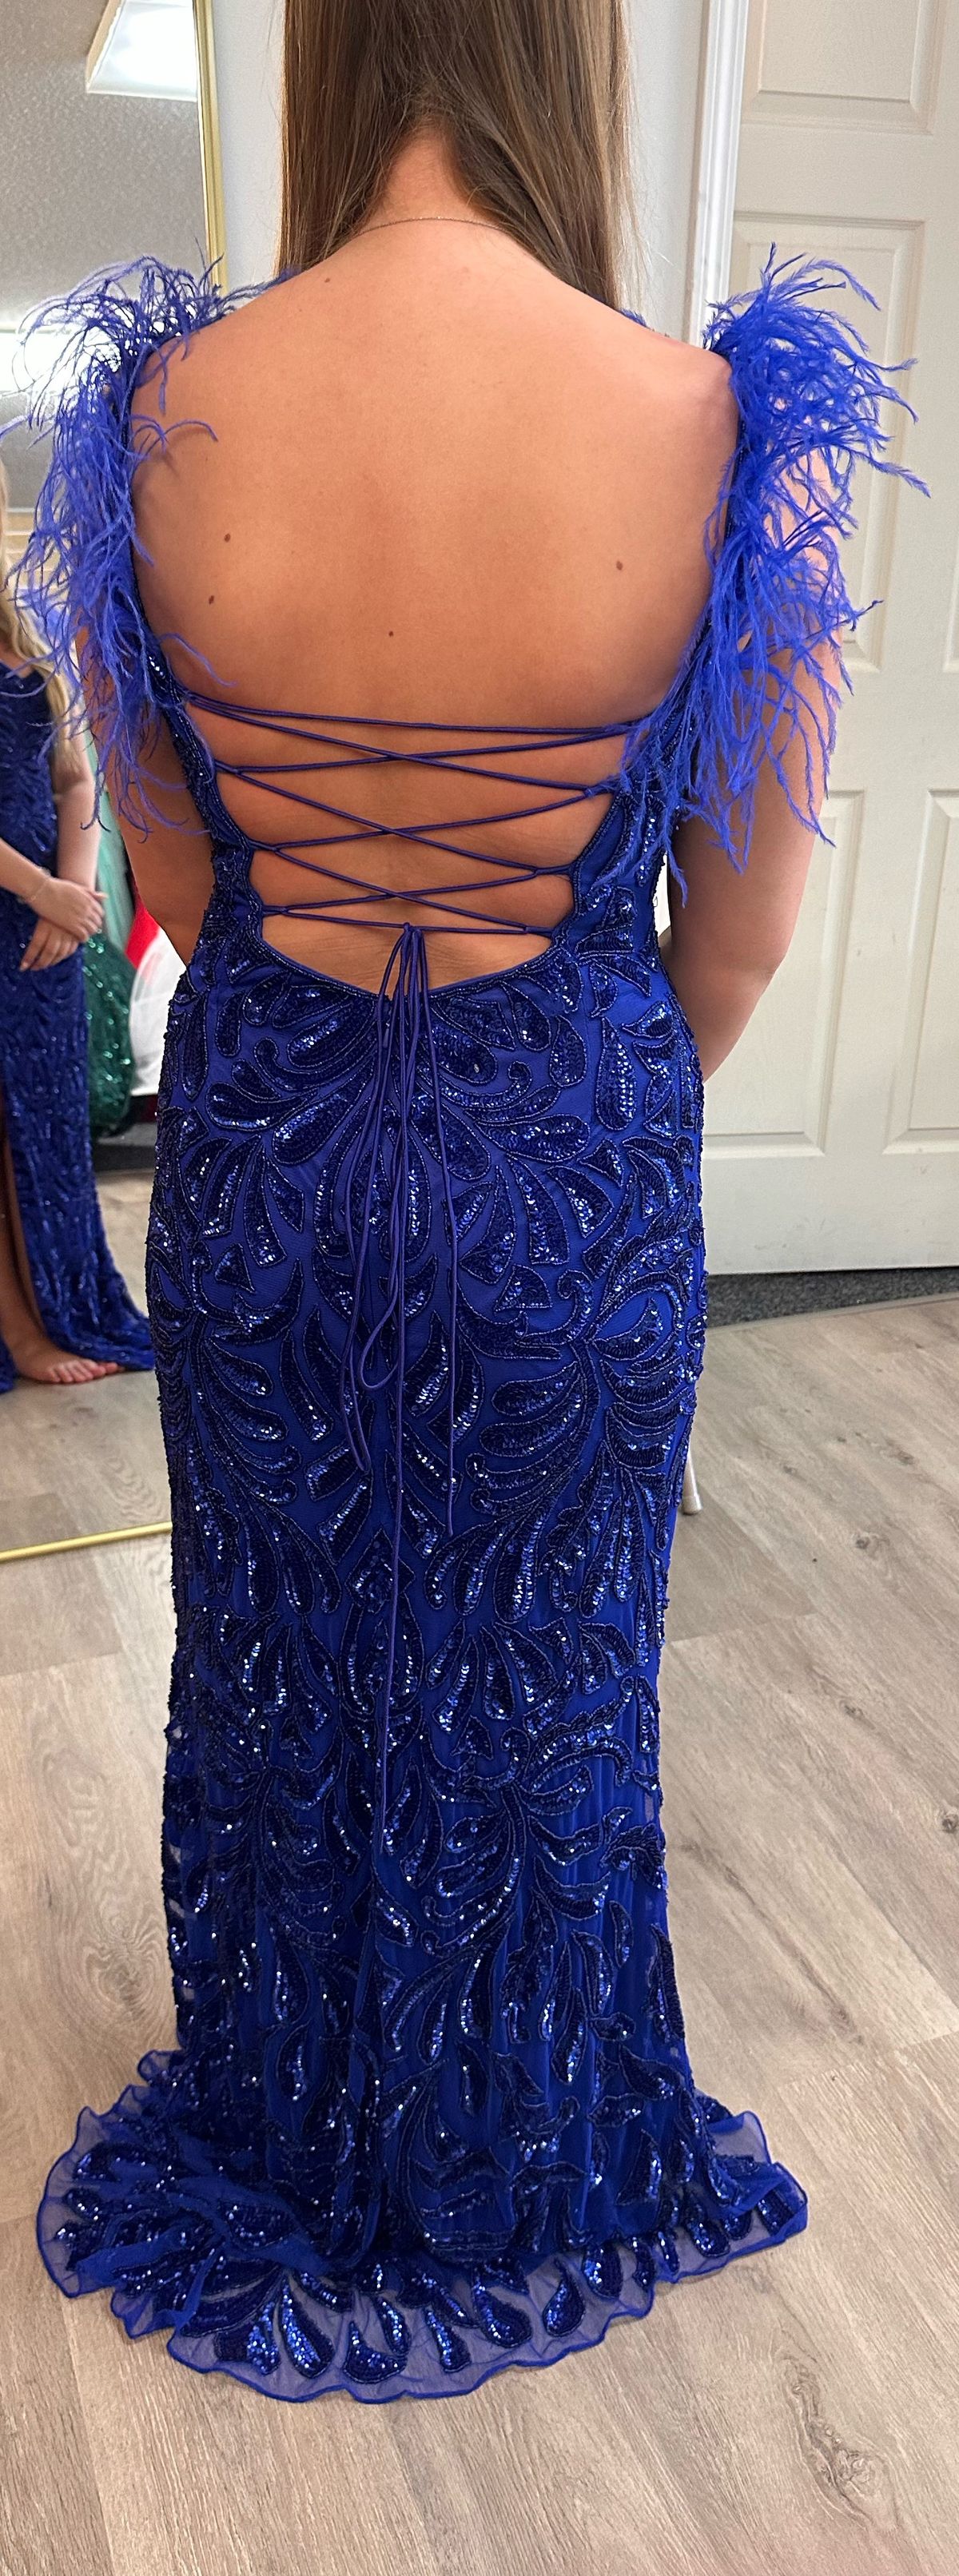 Primavera Size 8 Prom Plunge Sequined Royal Blue Side Slit Dress on Queenly